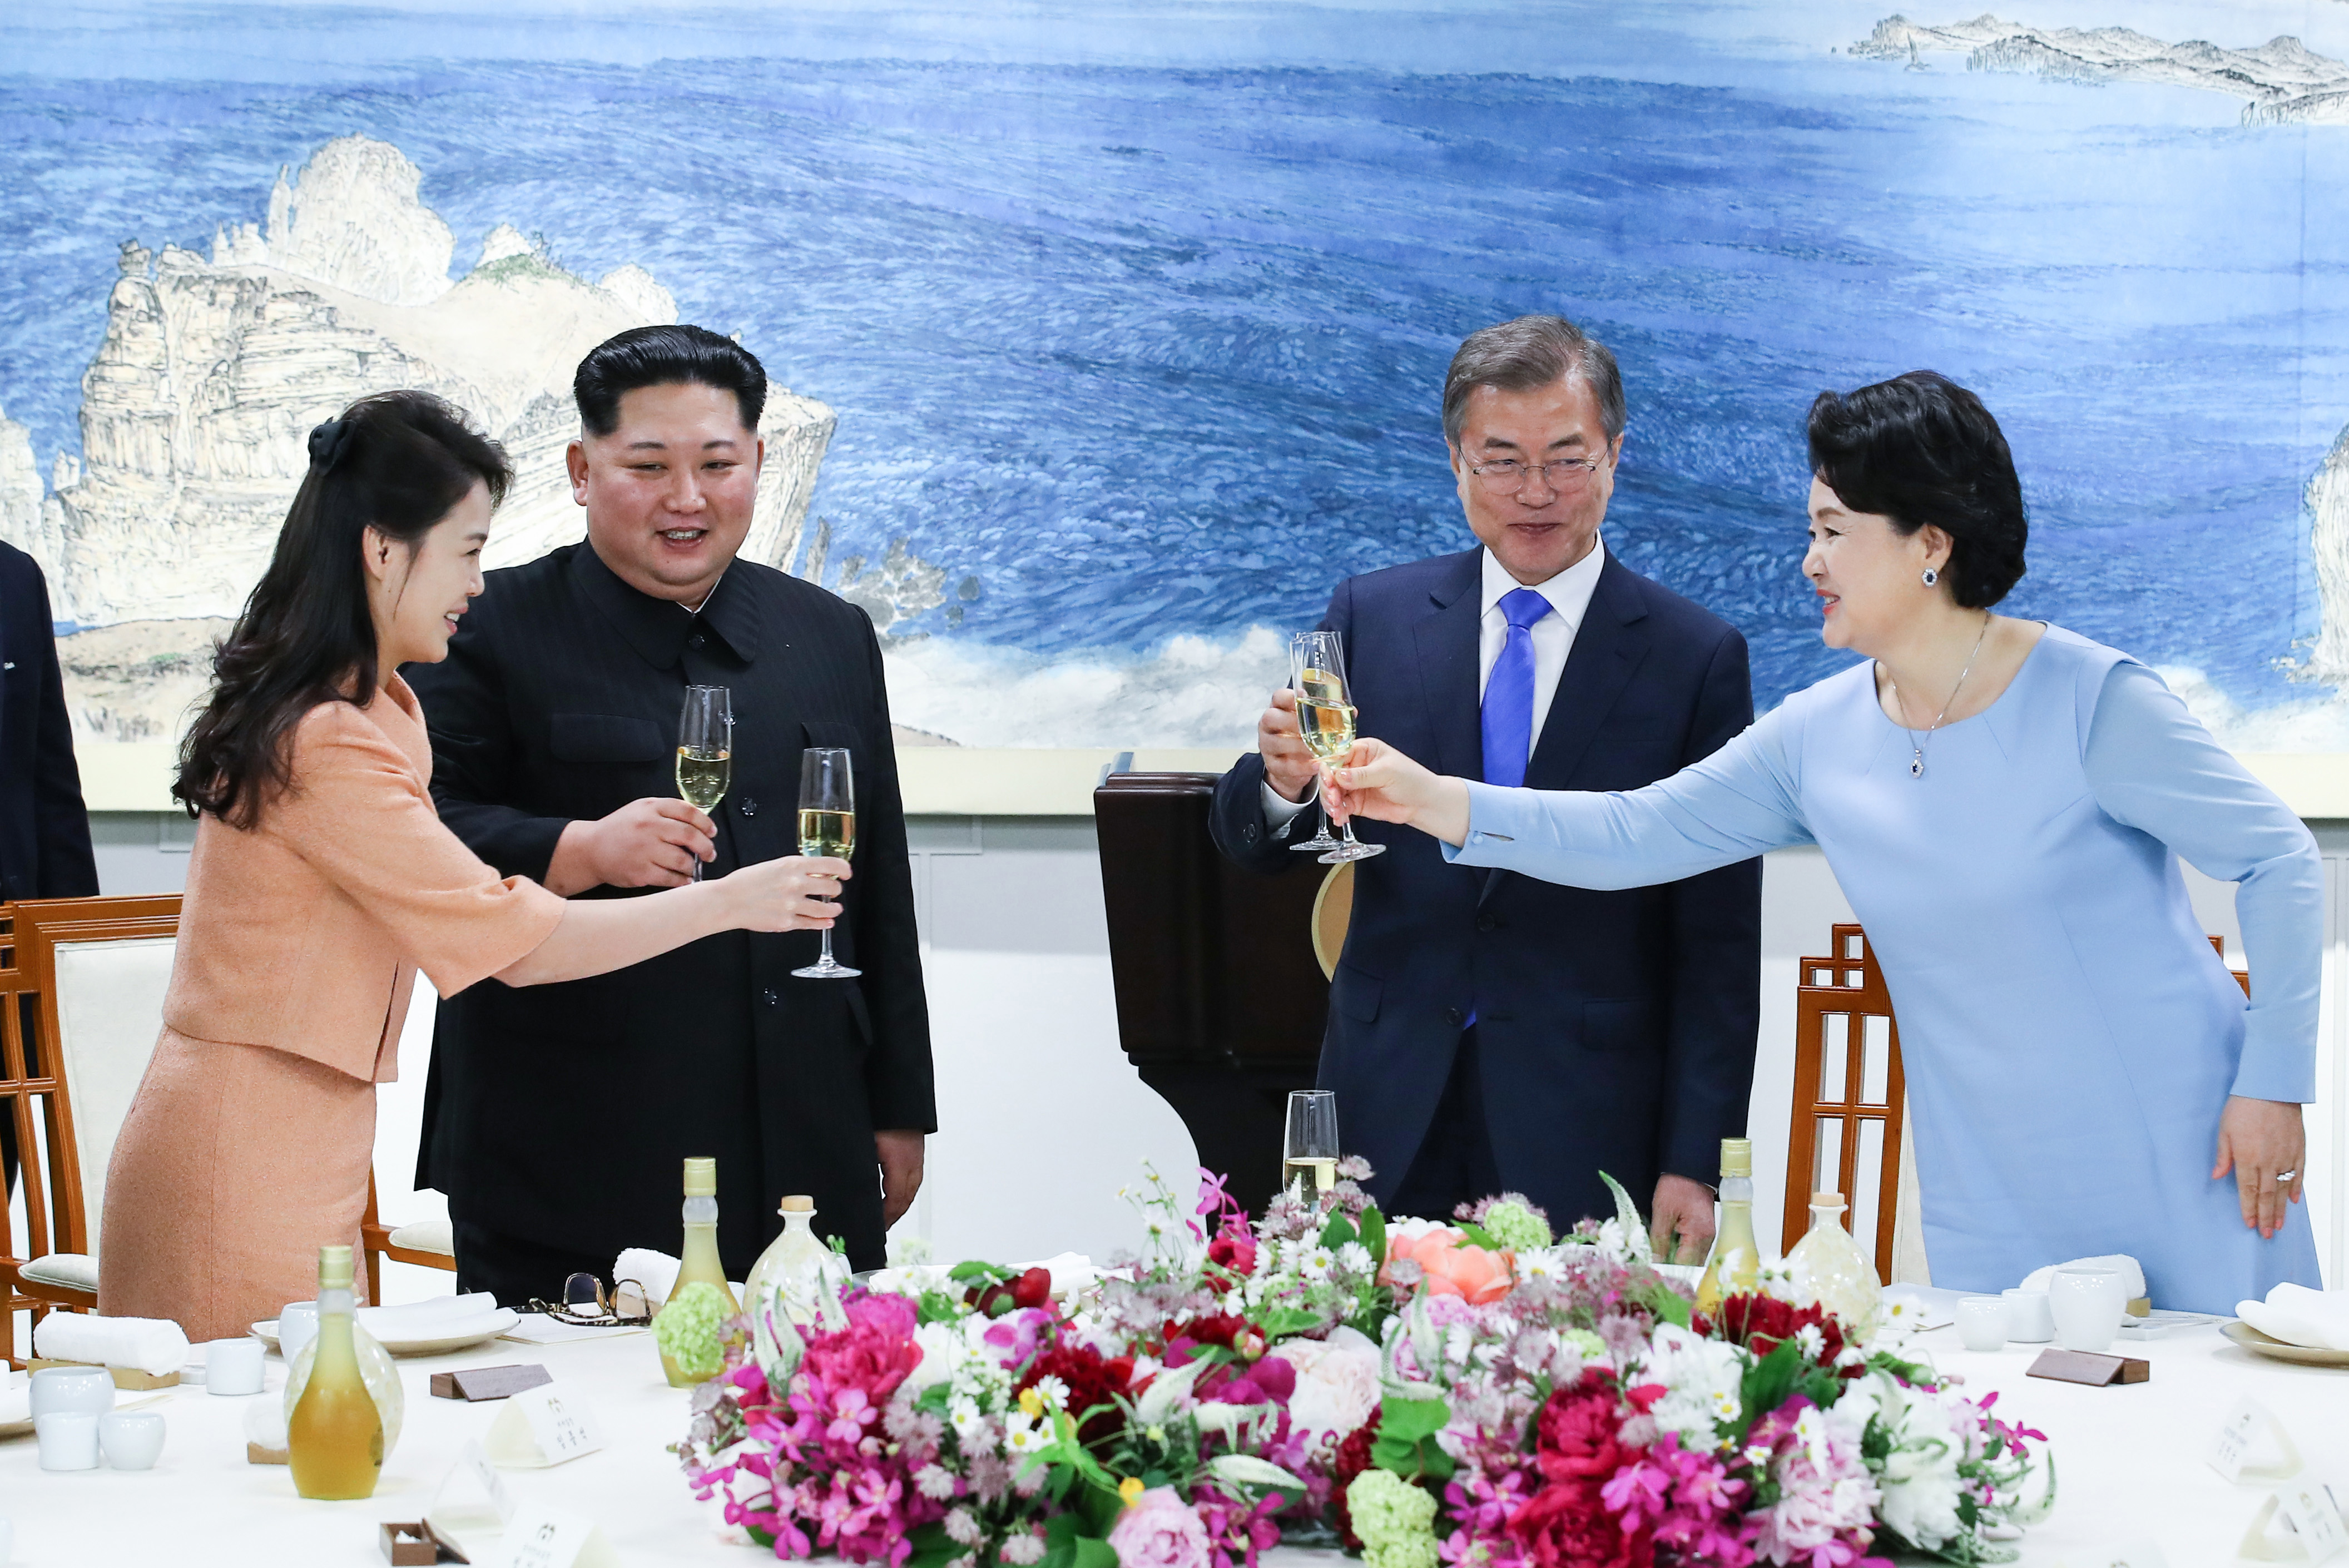 KOREA SUMMIT PRESS POOL/AFP/Getty Images